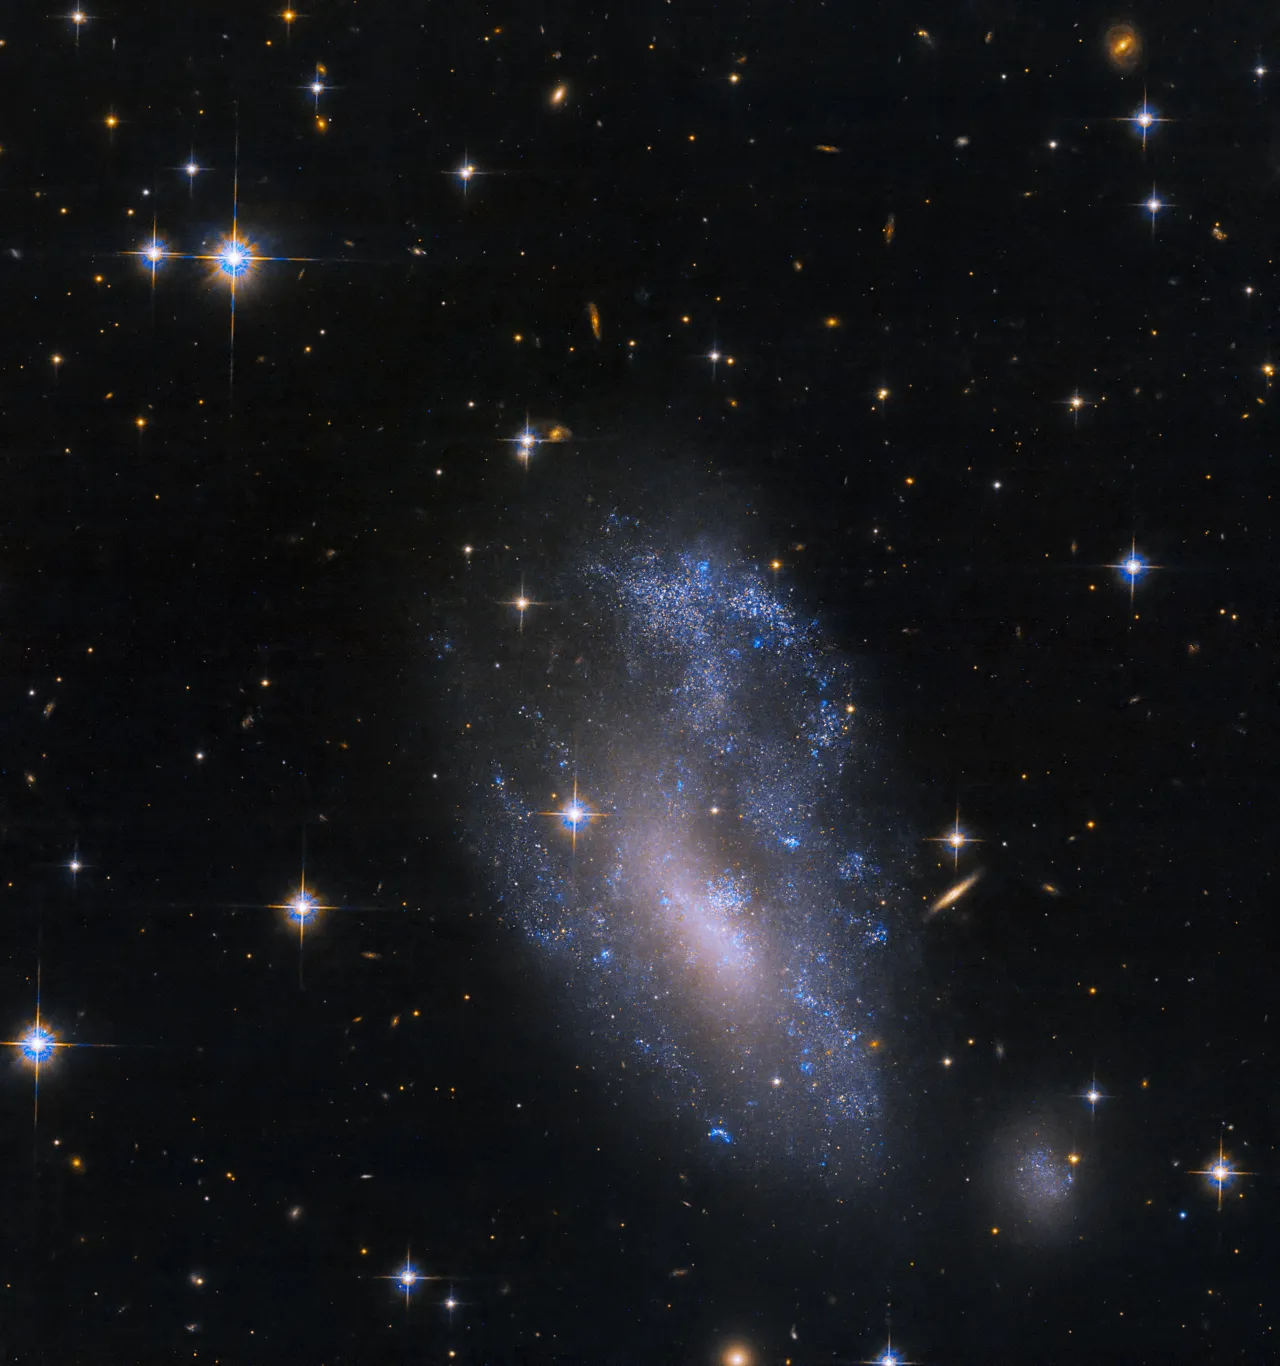 NASA's Hubble Space Telescope Spots Rarely Seen Possible Galaxy Encounter